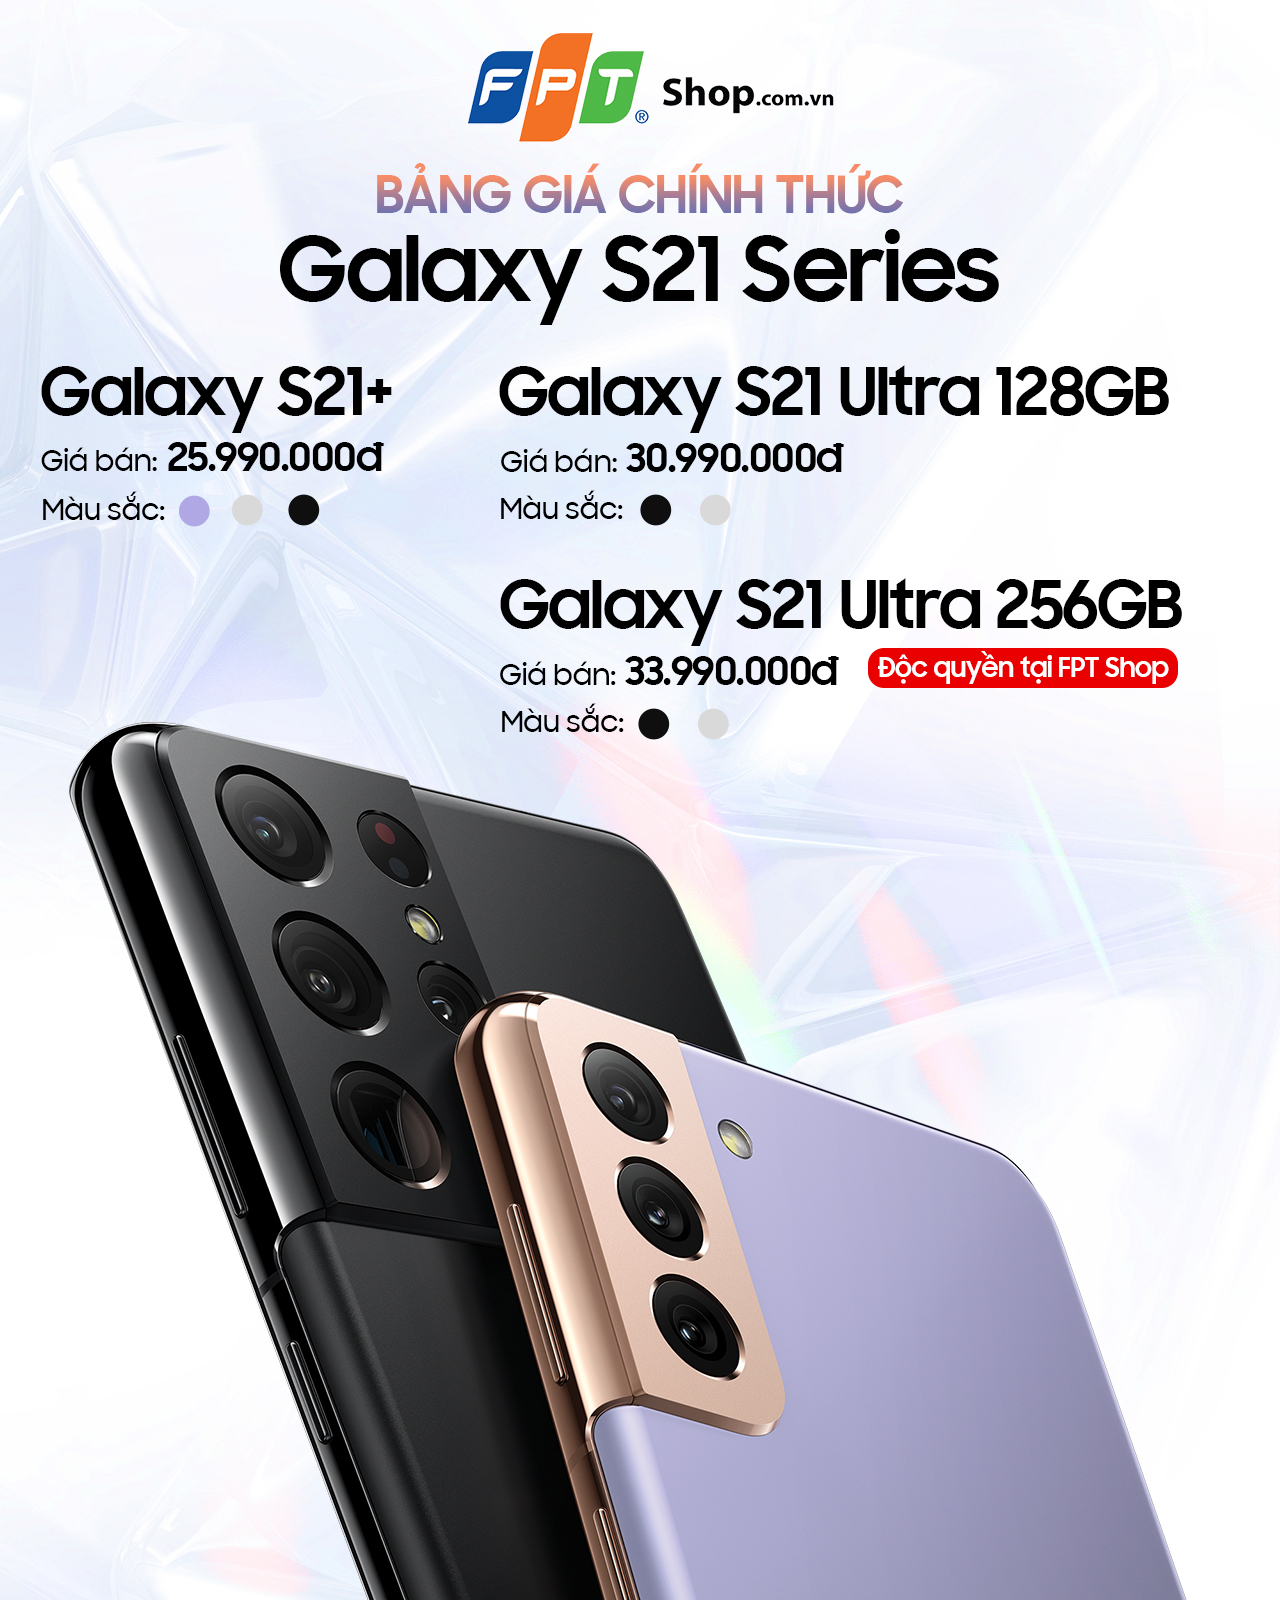 Nên mua Galaxy S21 Series ở đâu? 1